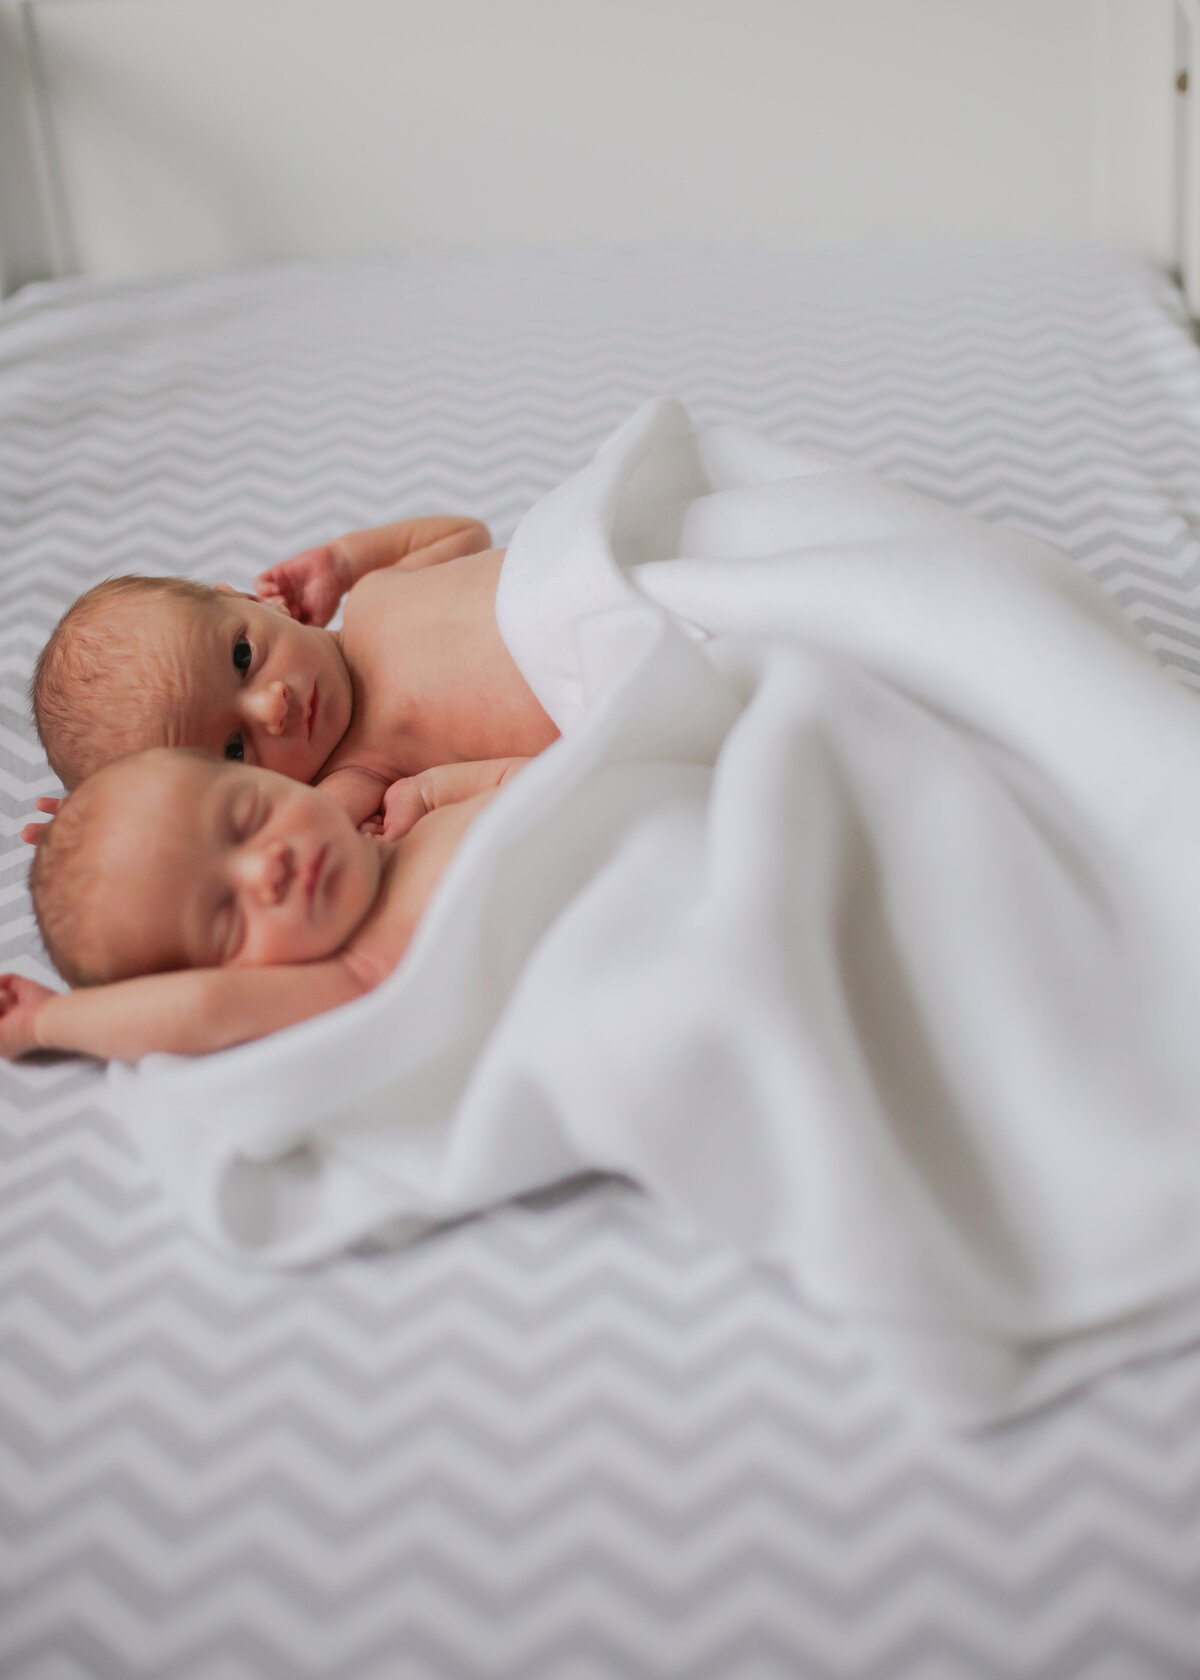 Vanessa is a wonderful photographer capturing stunning twin newborn portraits.